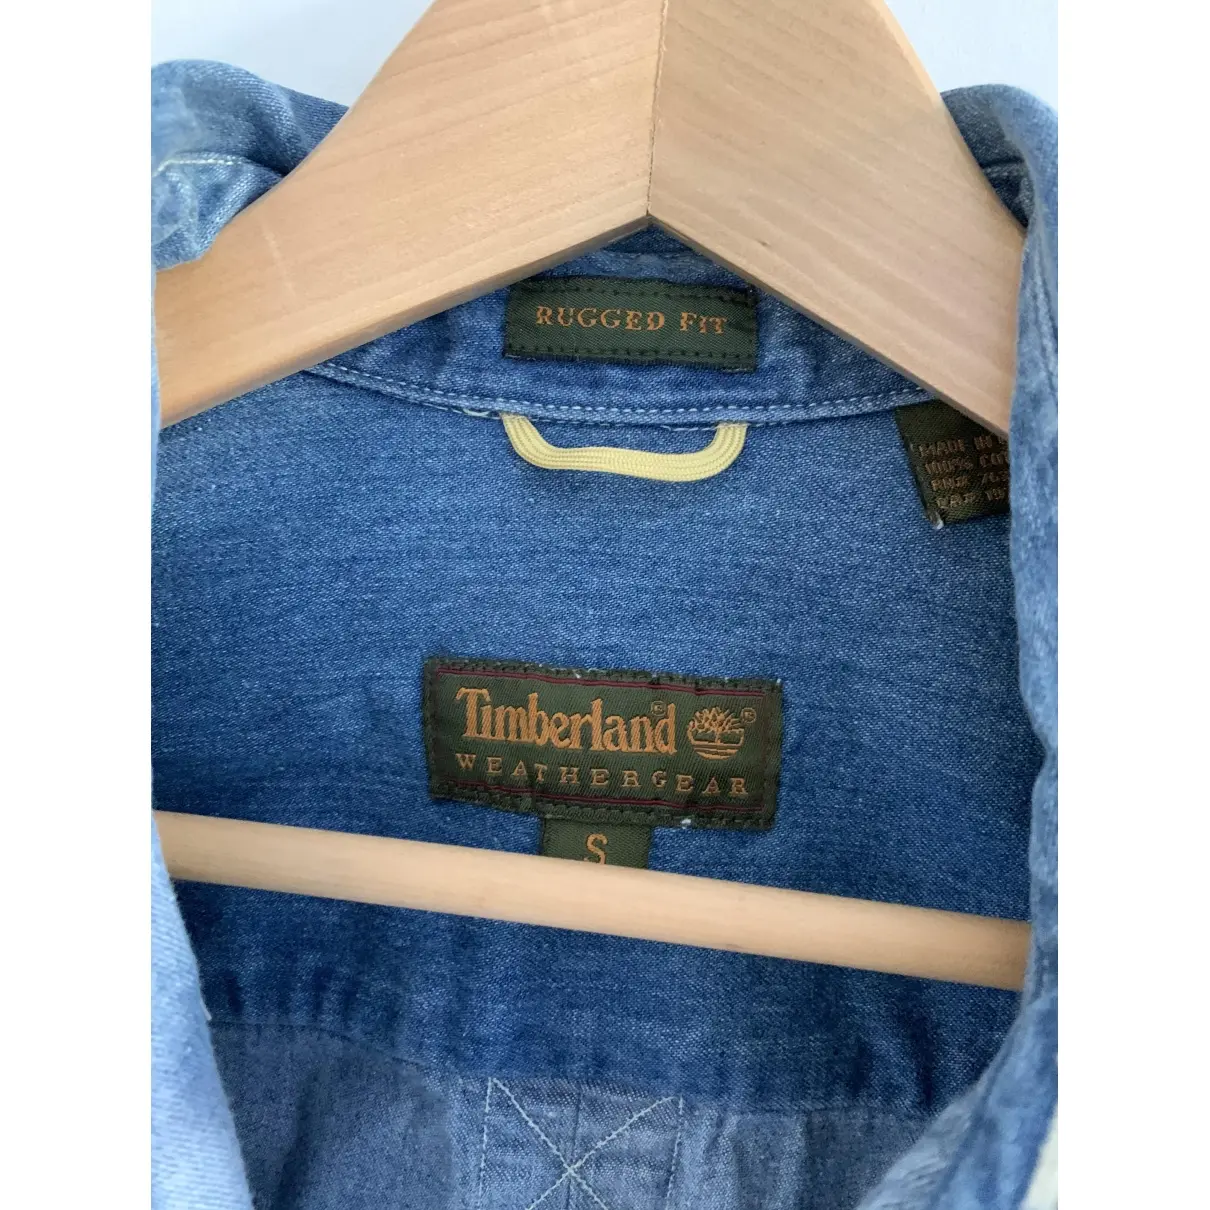 Timberland Shirt for sale